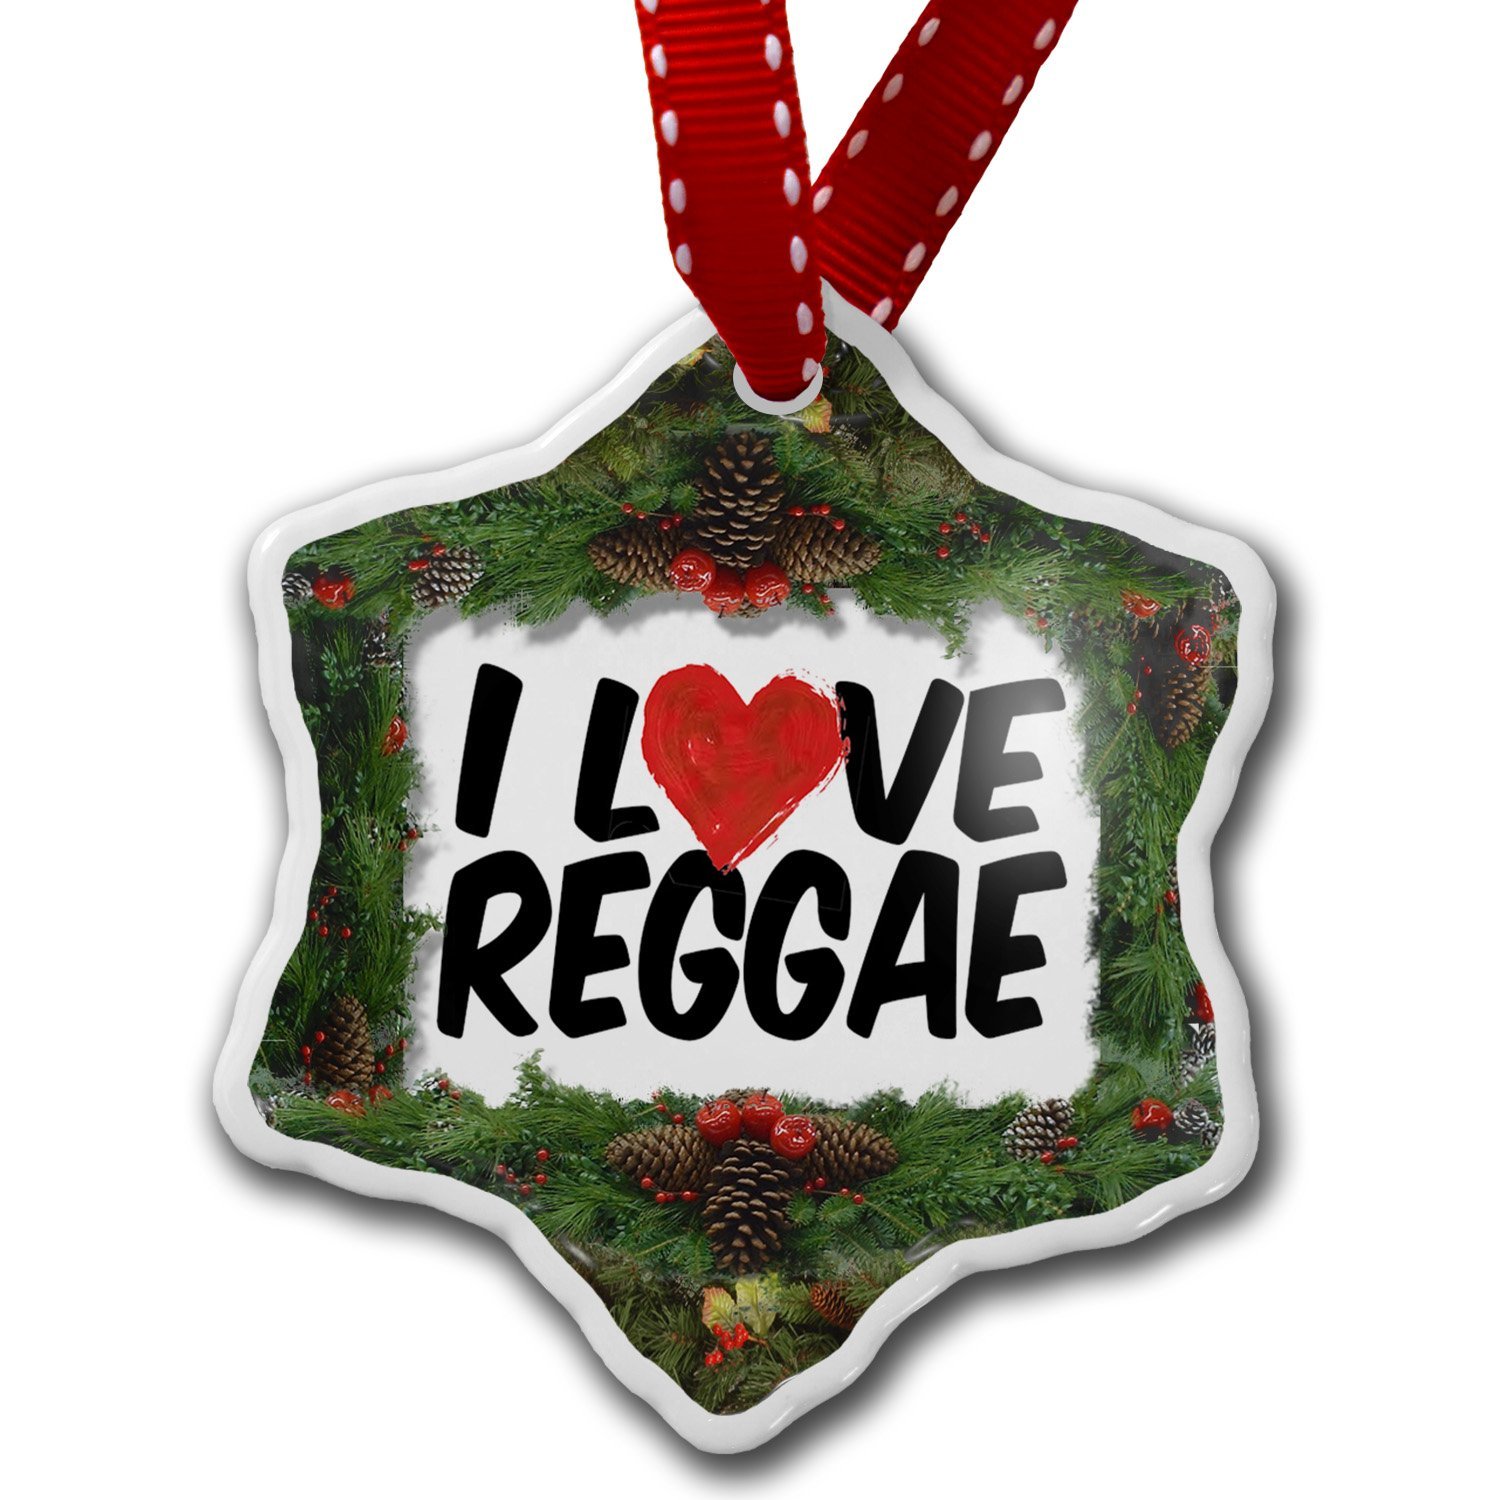 Reggae Christmas Ornaments – celebrating Bob Marley